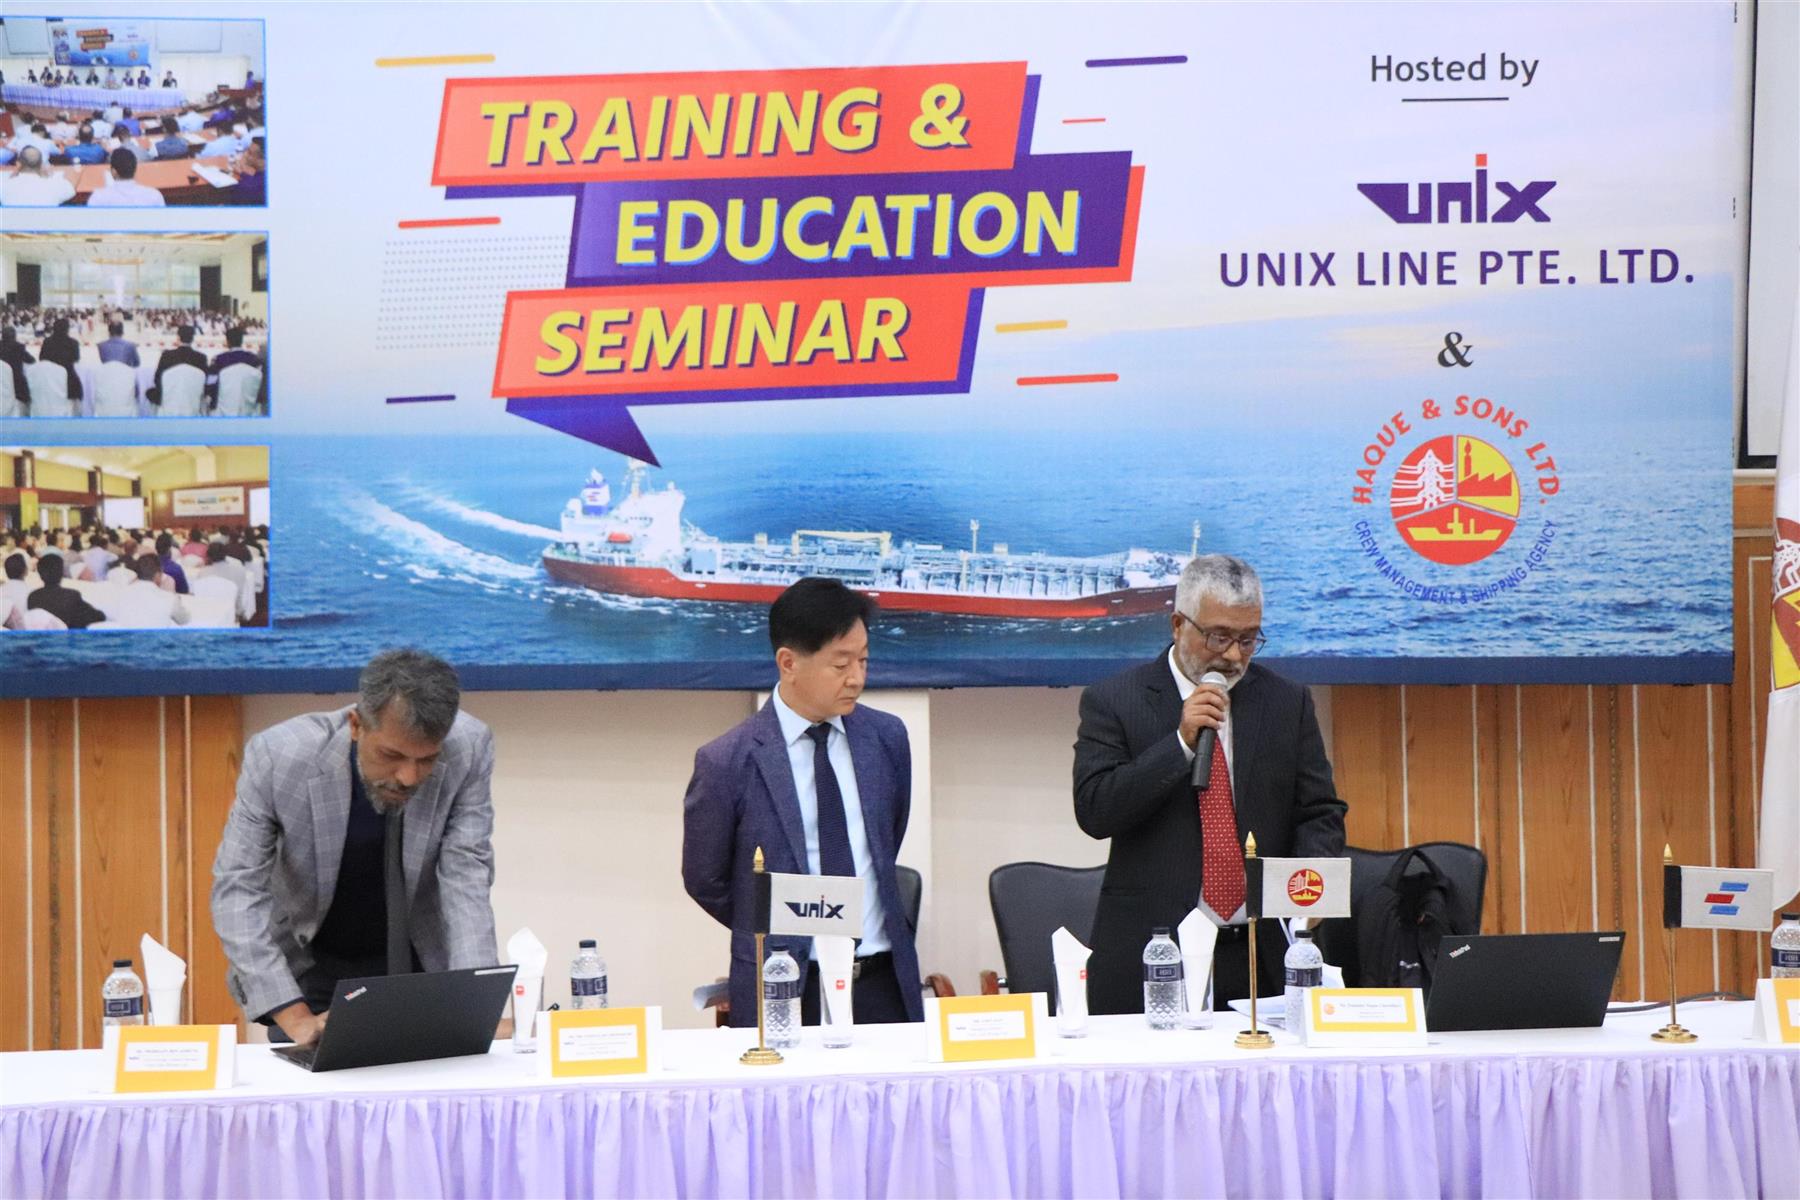 50th Training and Education Seminar of Unix Line Pte Ltd